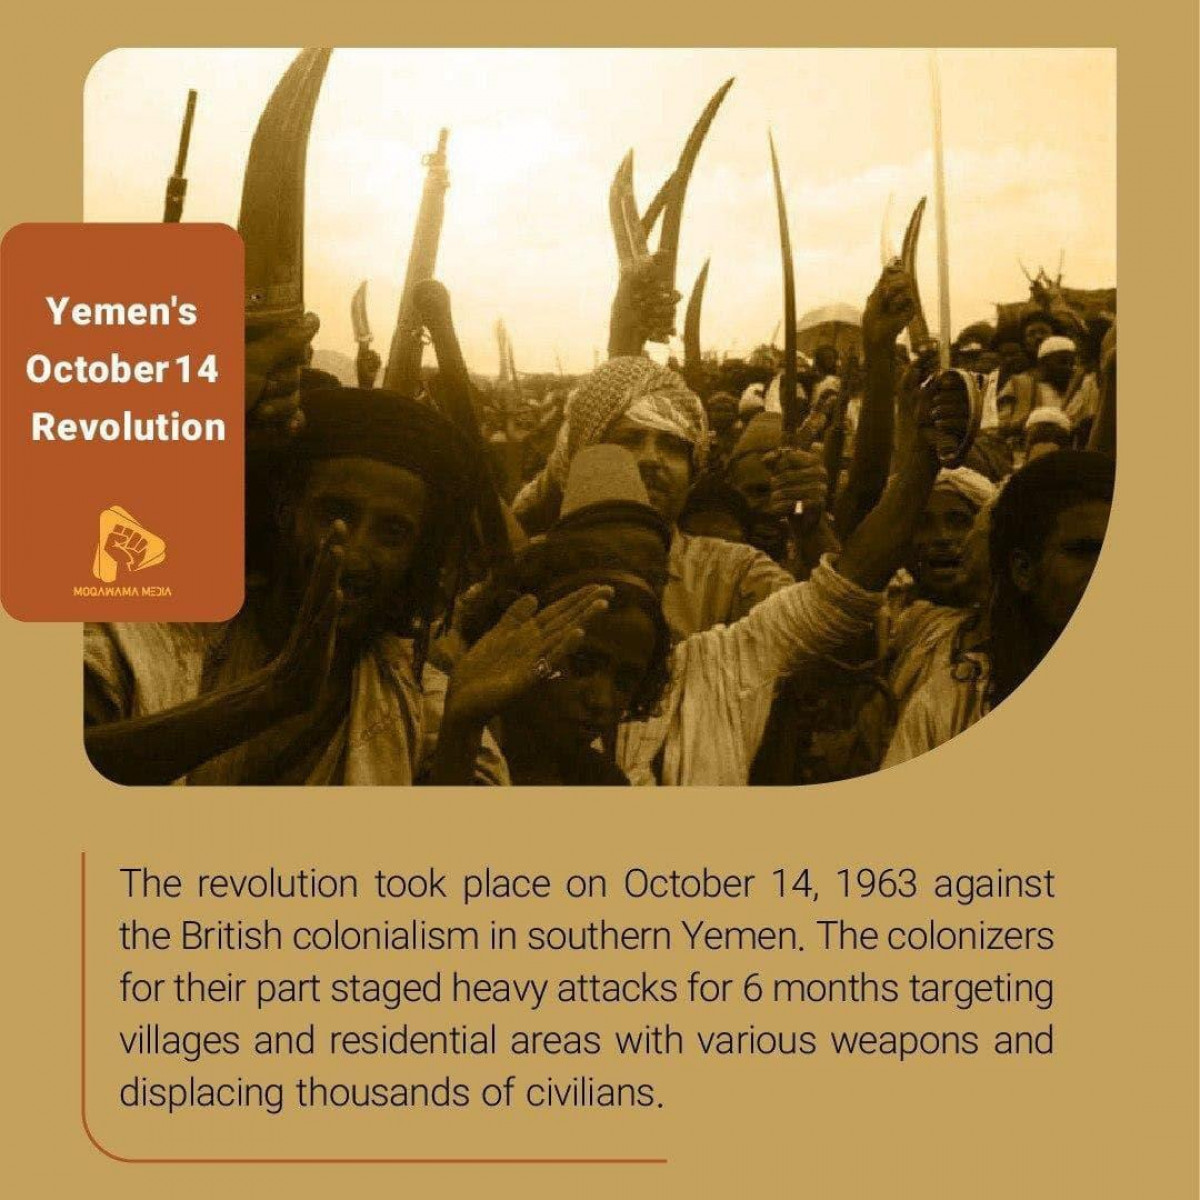 Yemen's October 14 Revolution